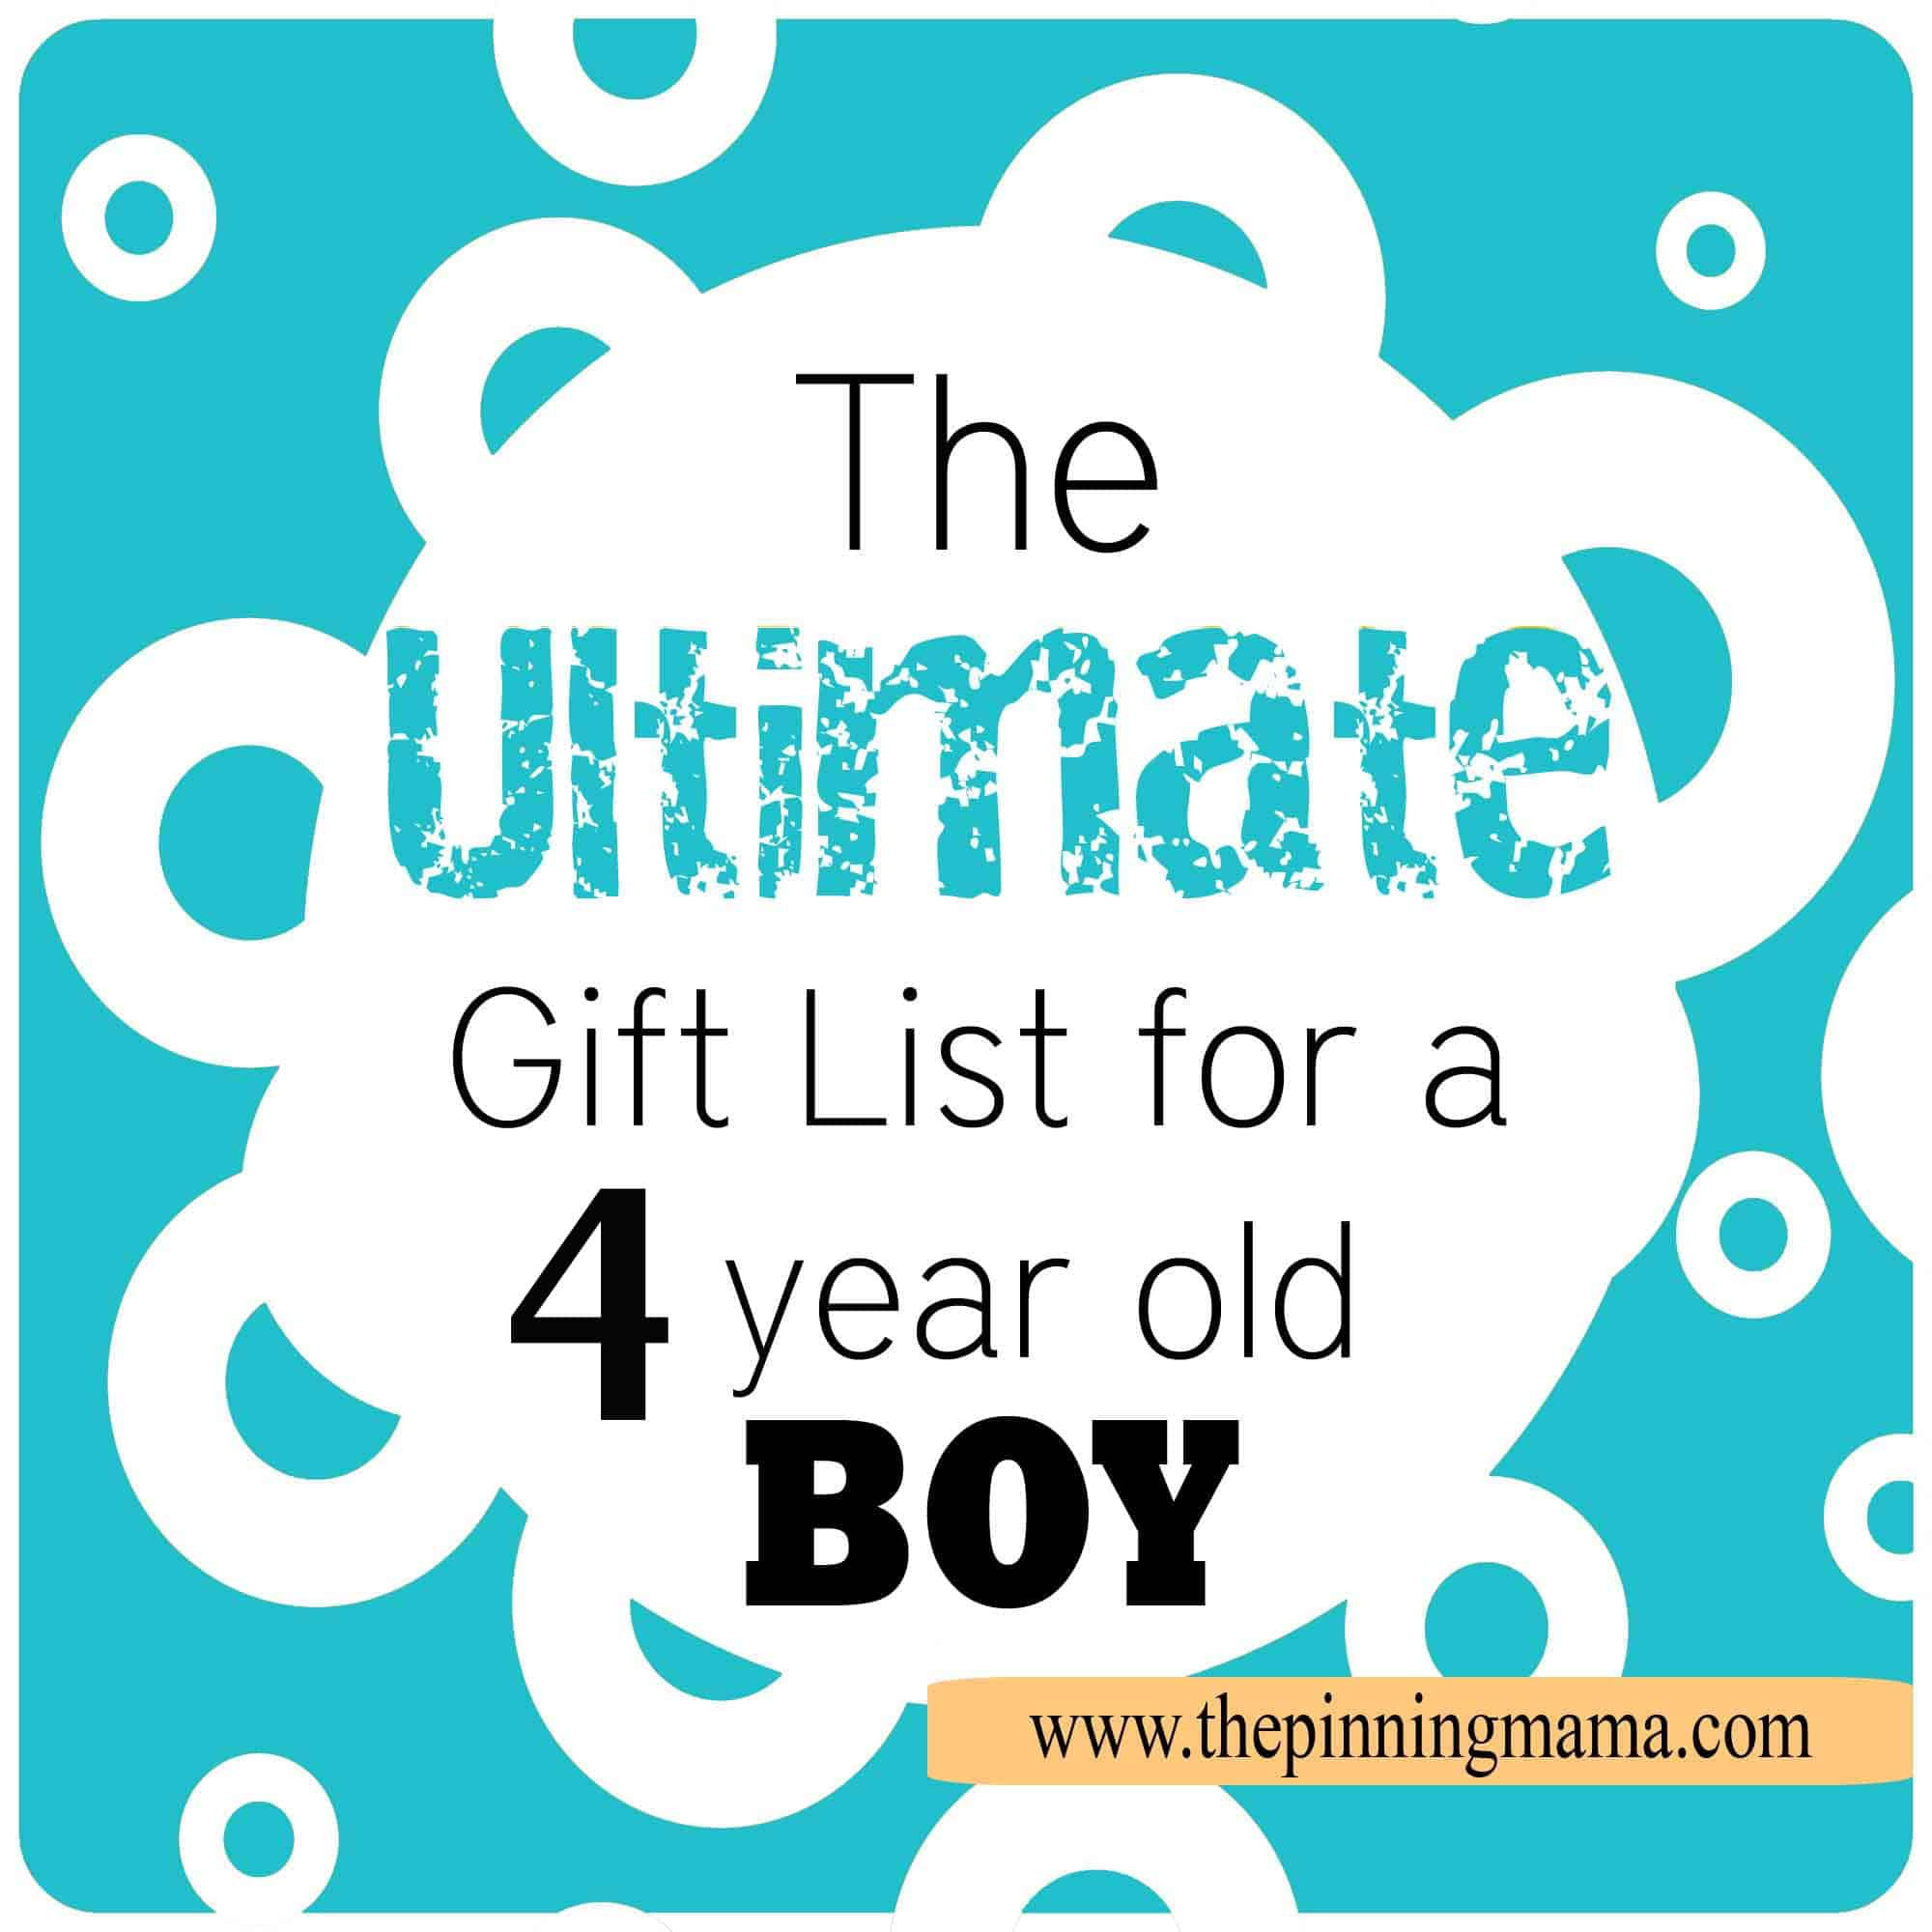 4 Yr Old Boy Birthday Gift Ideas
 The Best Gift Ideas for a 4 Year Old Boy